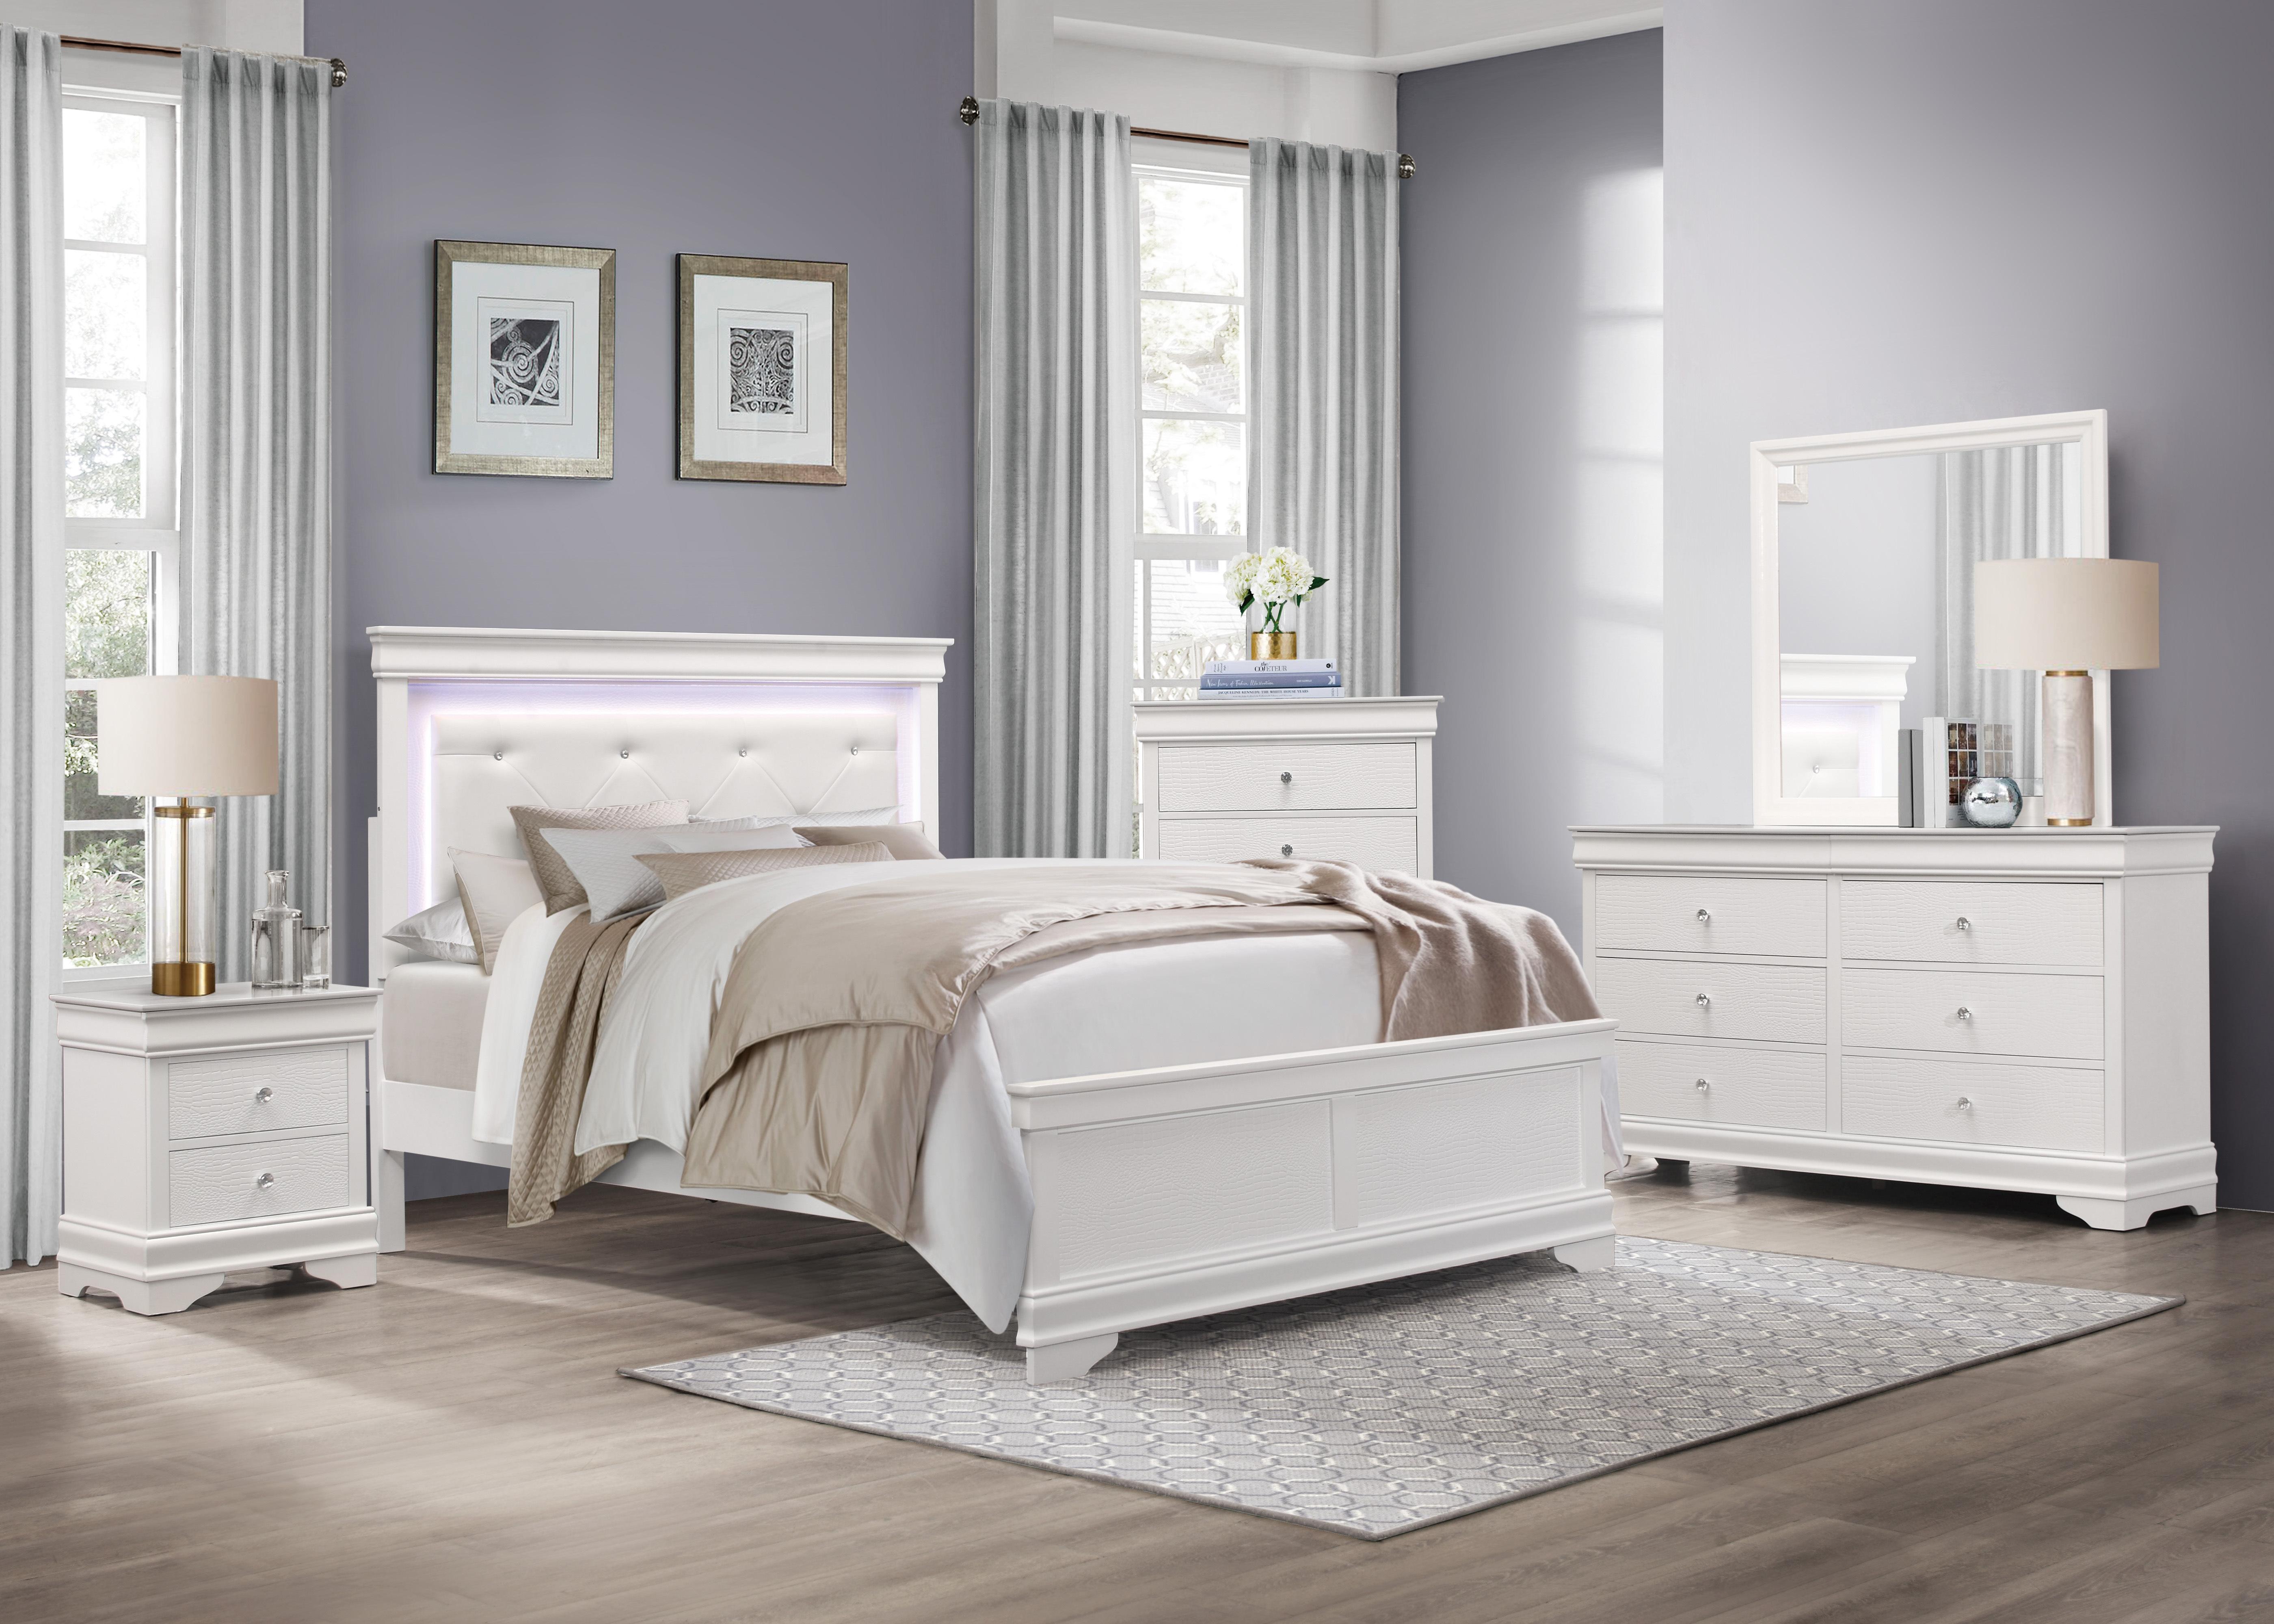 Traditional Bedroom Set 1556WK-1EK-6PC Lana 1556WK-1EK-6PC in White Faux Leather